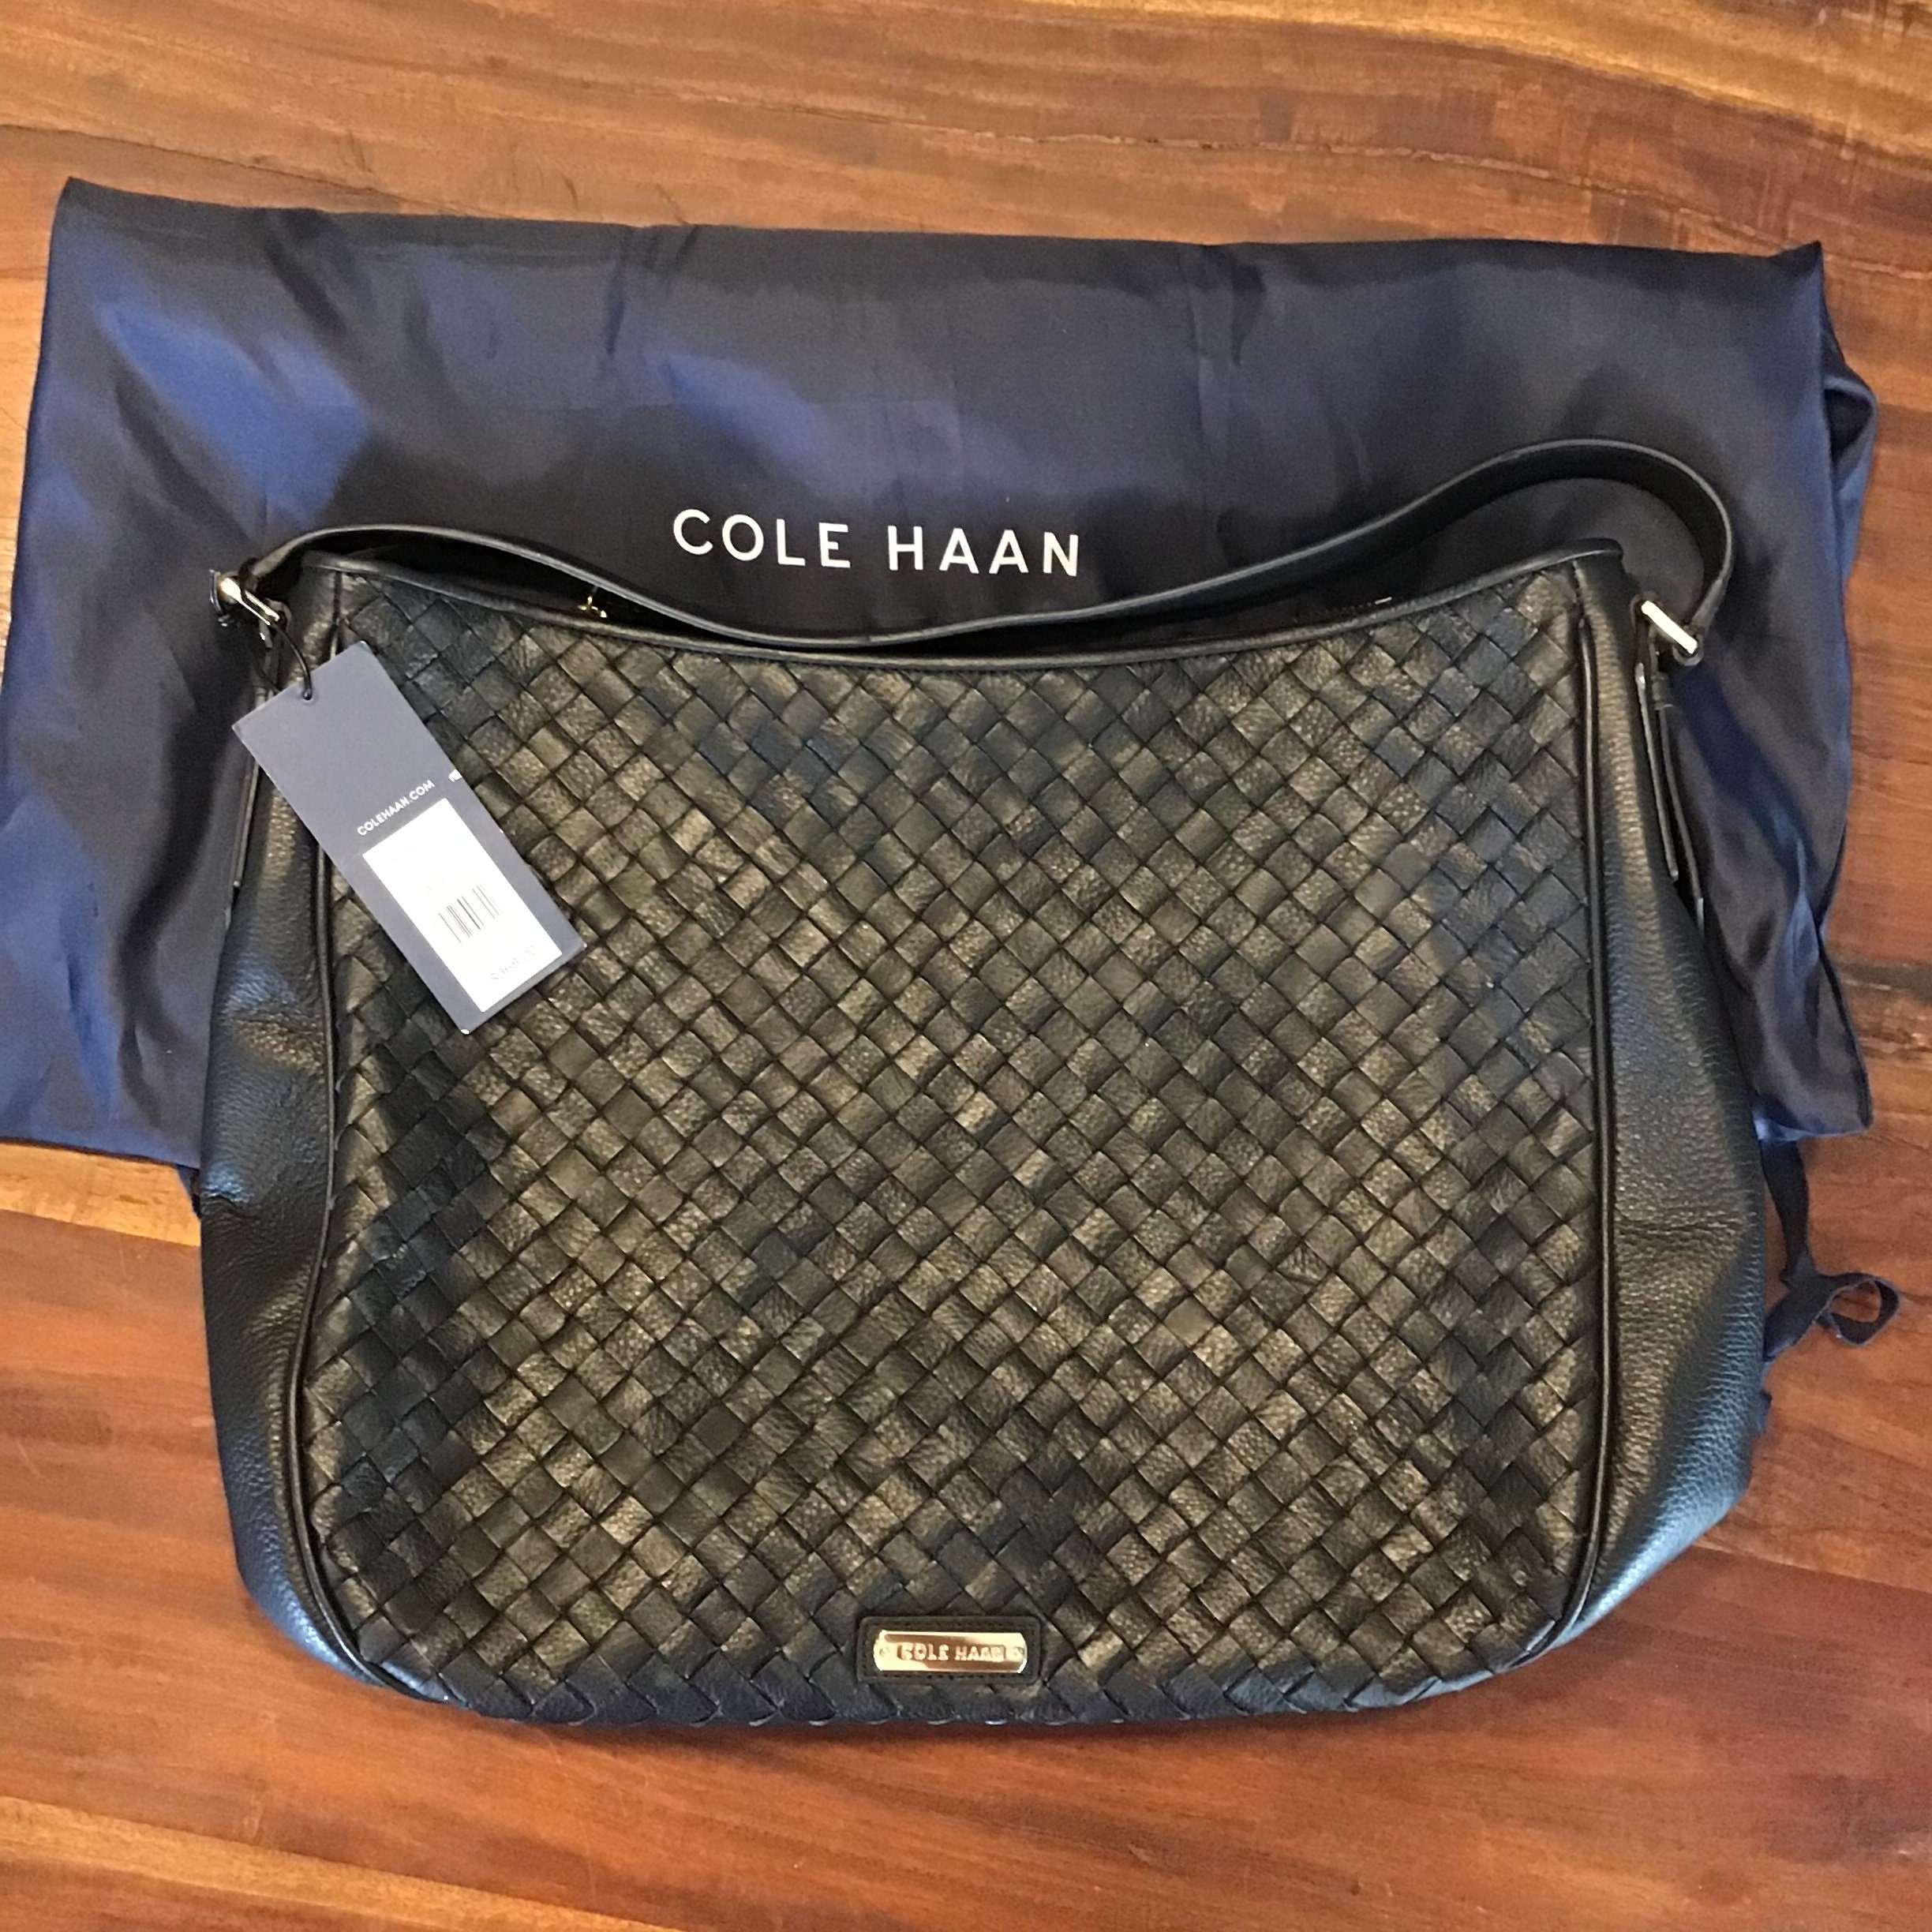 Cole Haan Black Pebble Leather Shoulder Purse - beyond exchange